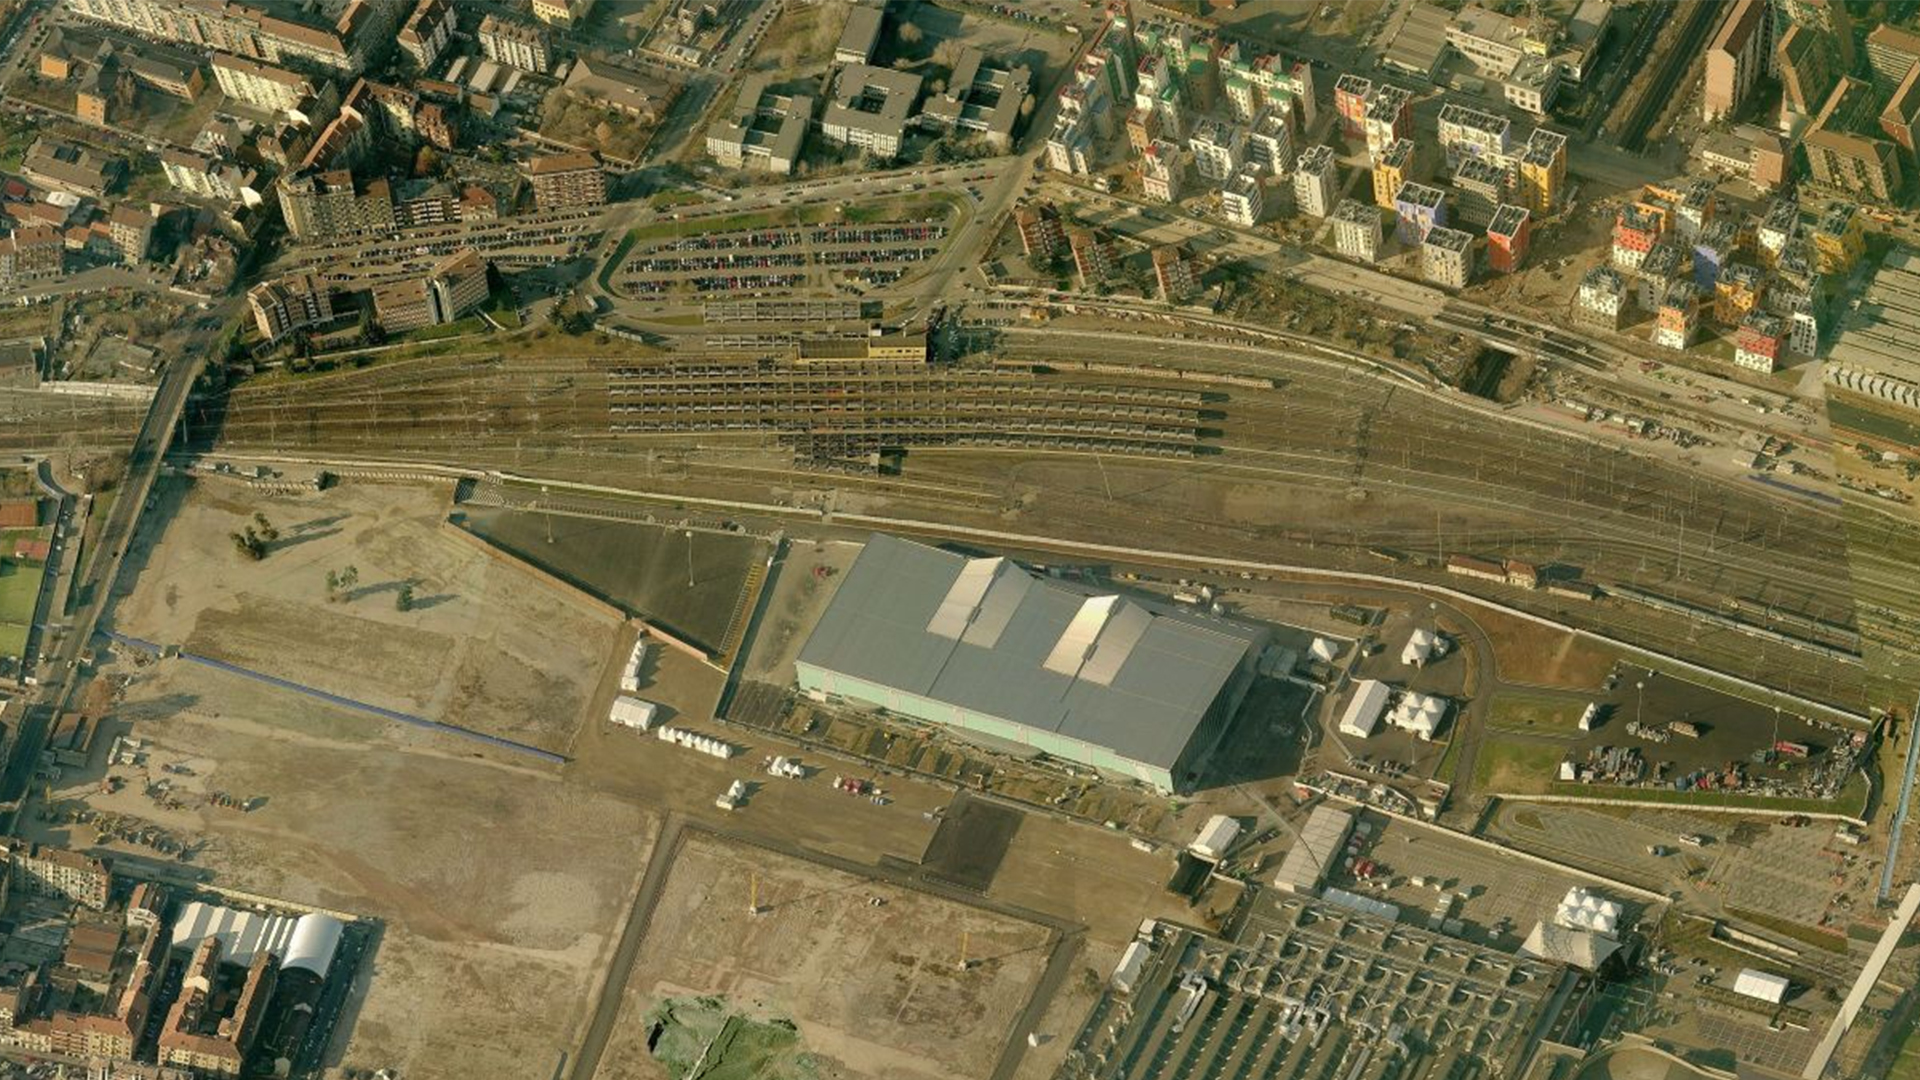 Turin railway Stations – Upgrading of the Railway Line